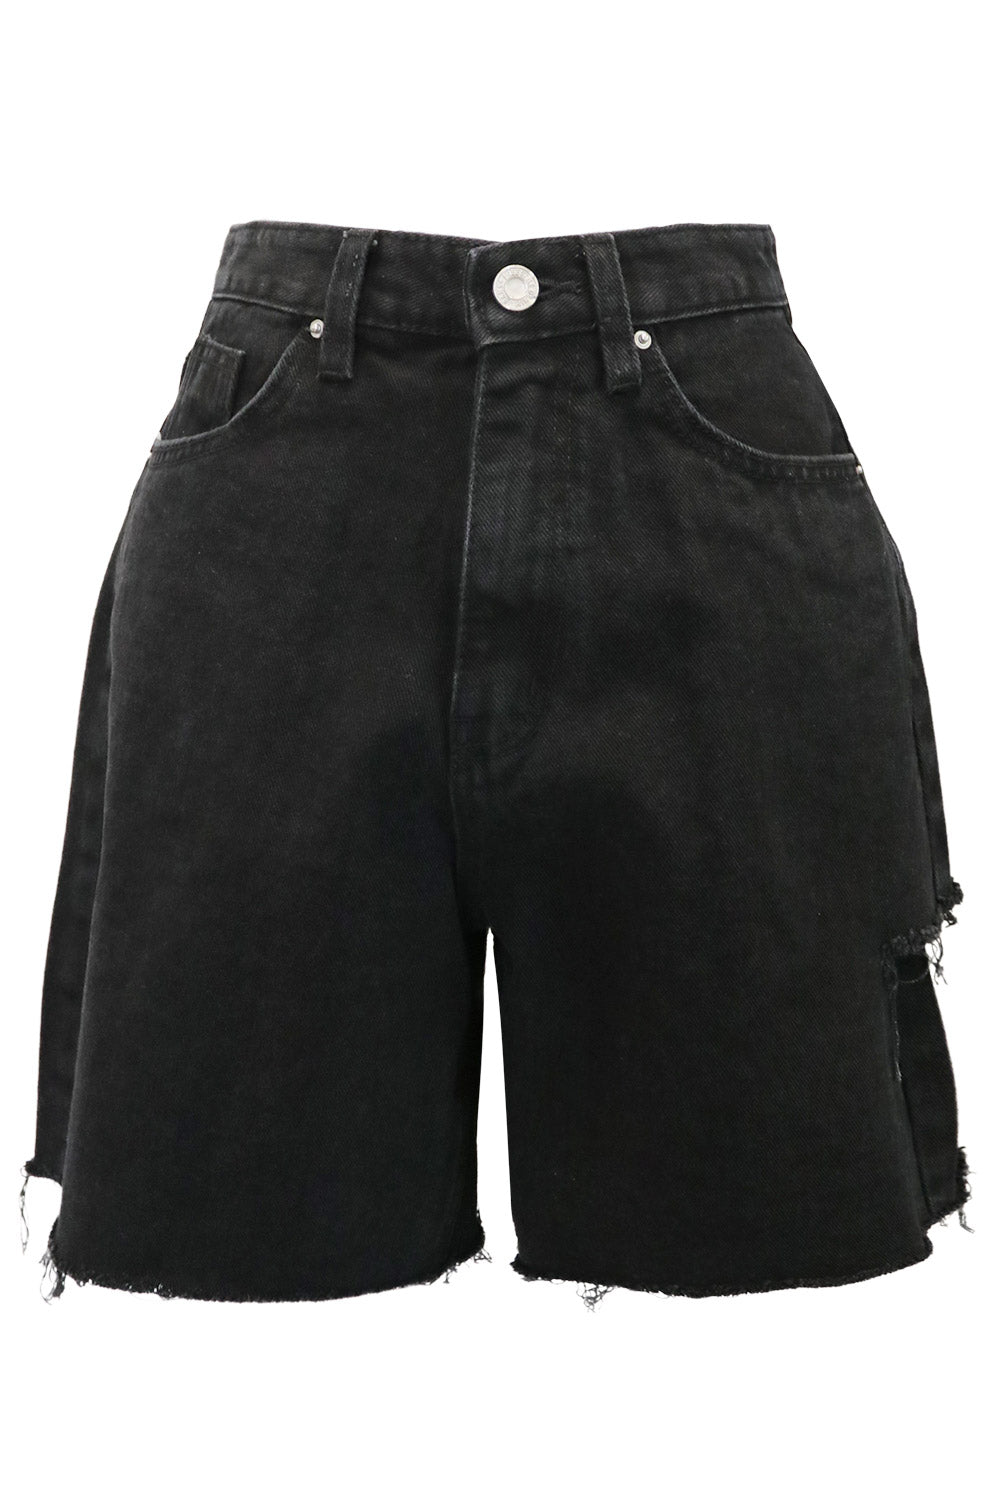 storets.com Remington Slash Side Shorts